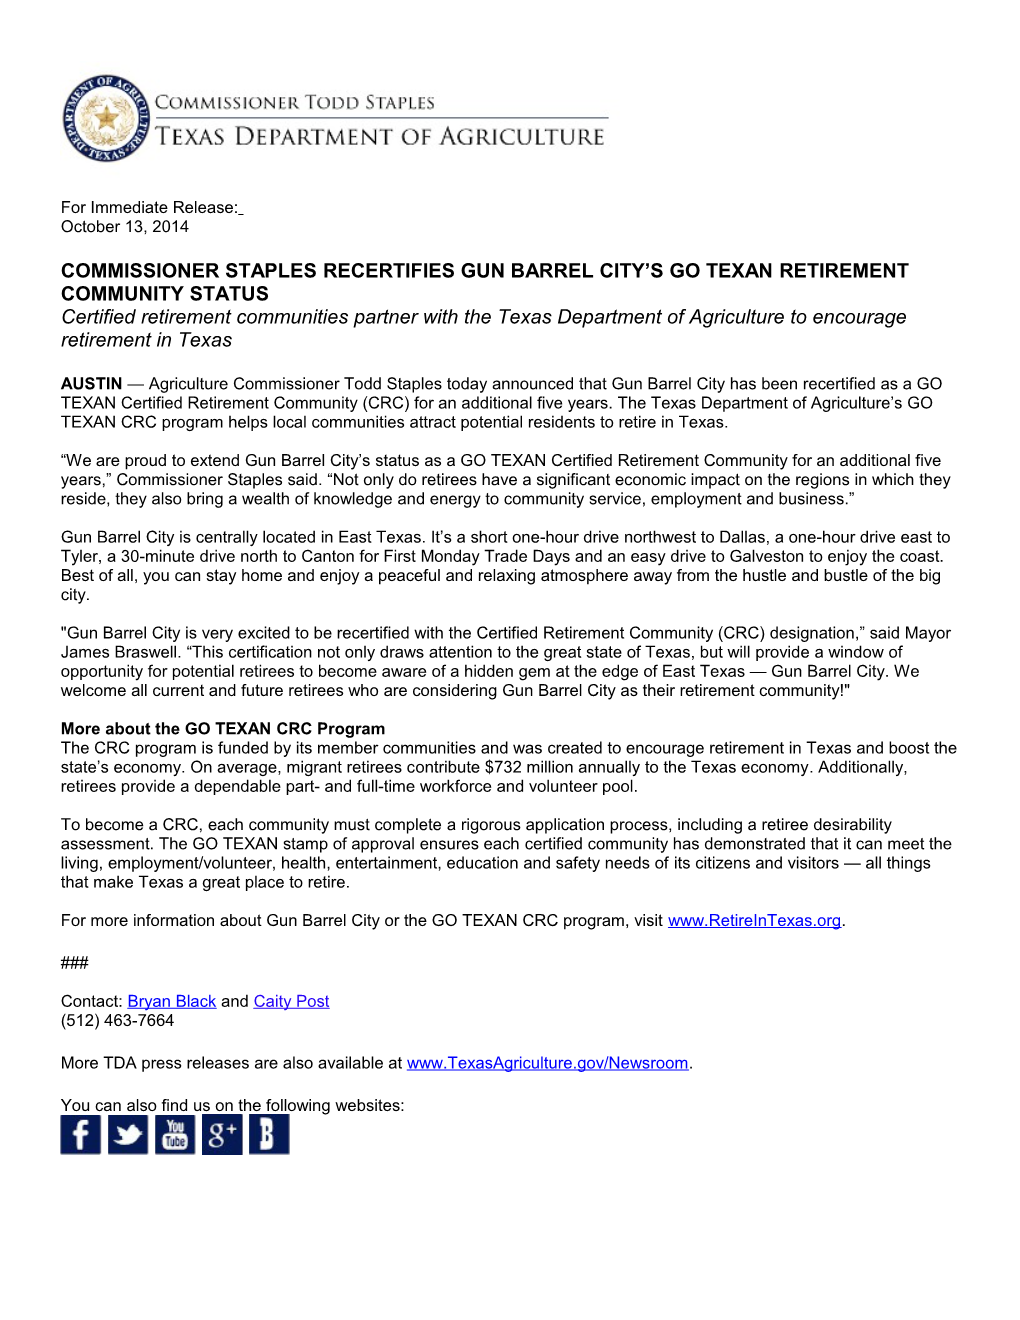 Commissioner Staples Recertifies Gun Barrel City S Go Texan Retirement Community Status